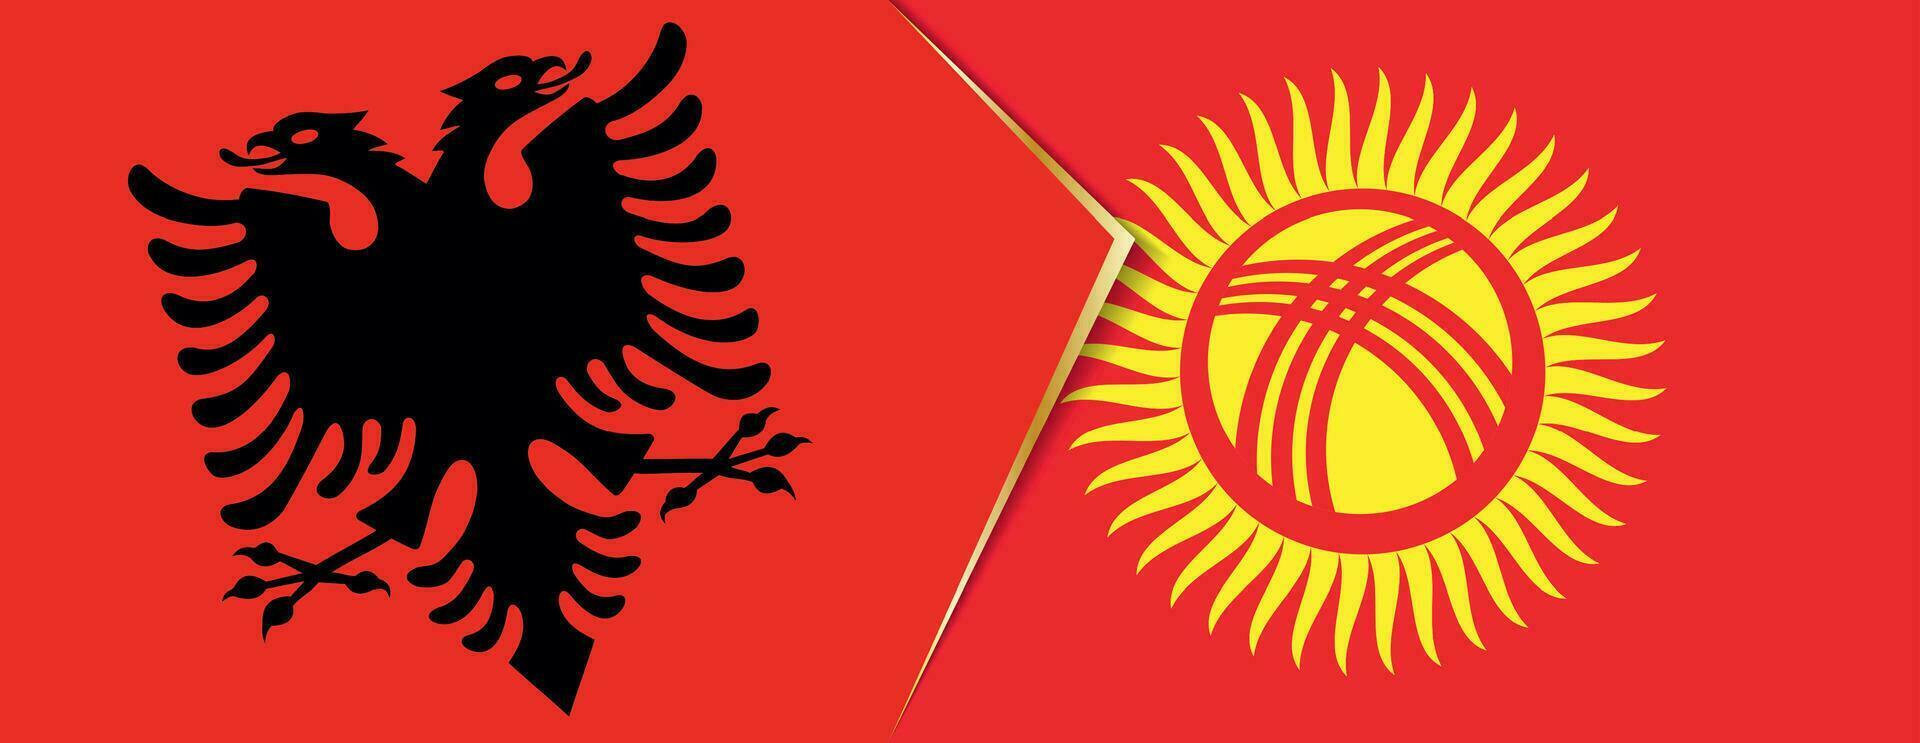 Albania e Kyrgyzstan bandiere, Due vettore bandiere.